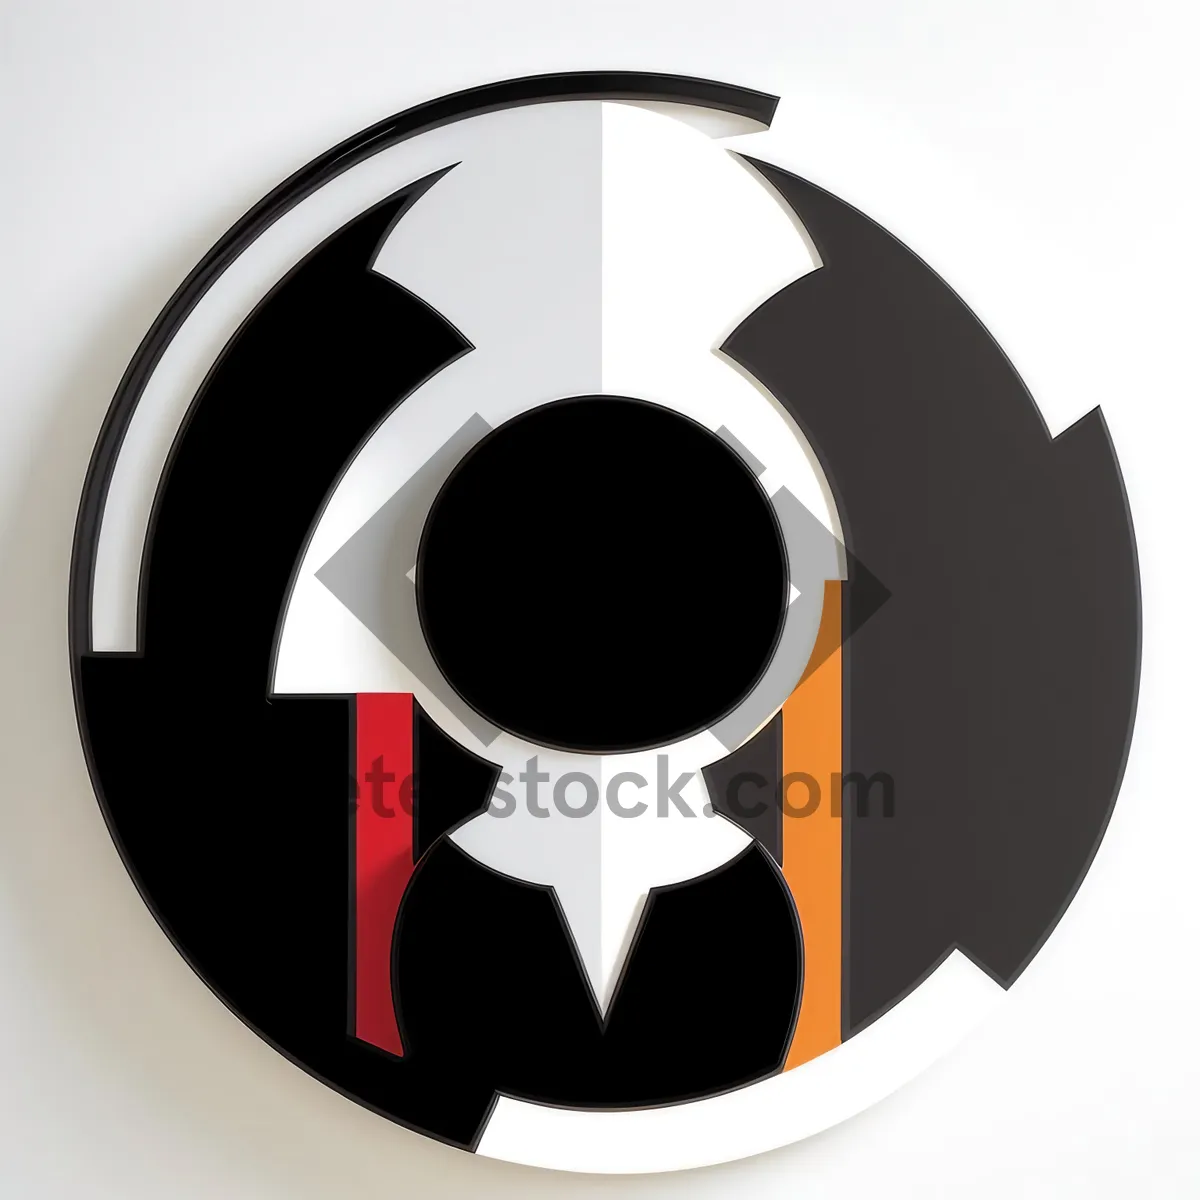 Picture of Black Round Button Icon: Web See Symbol